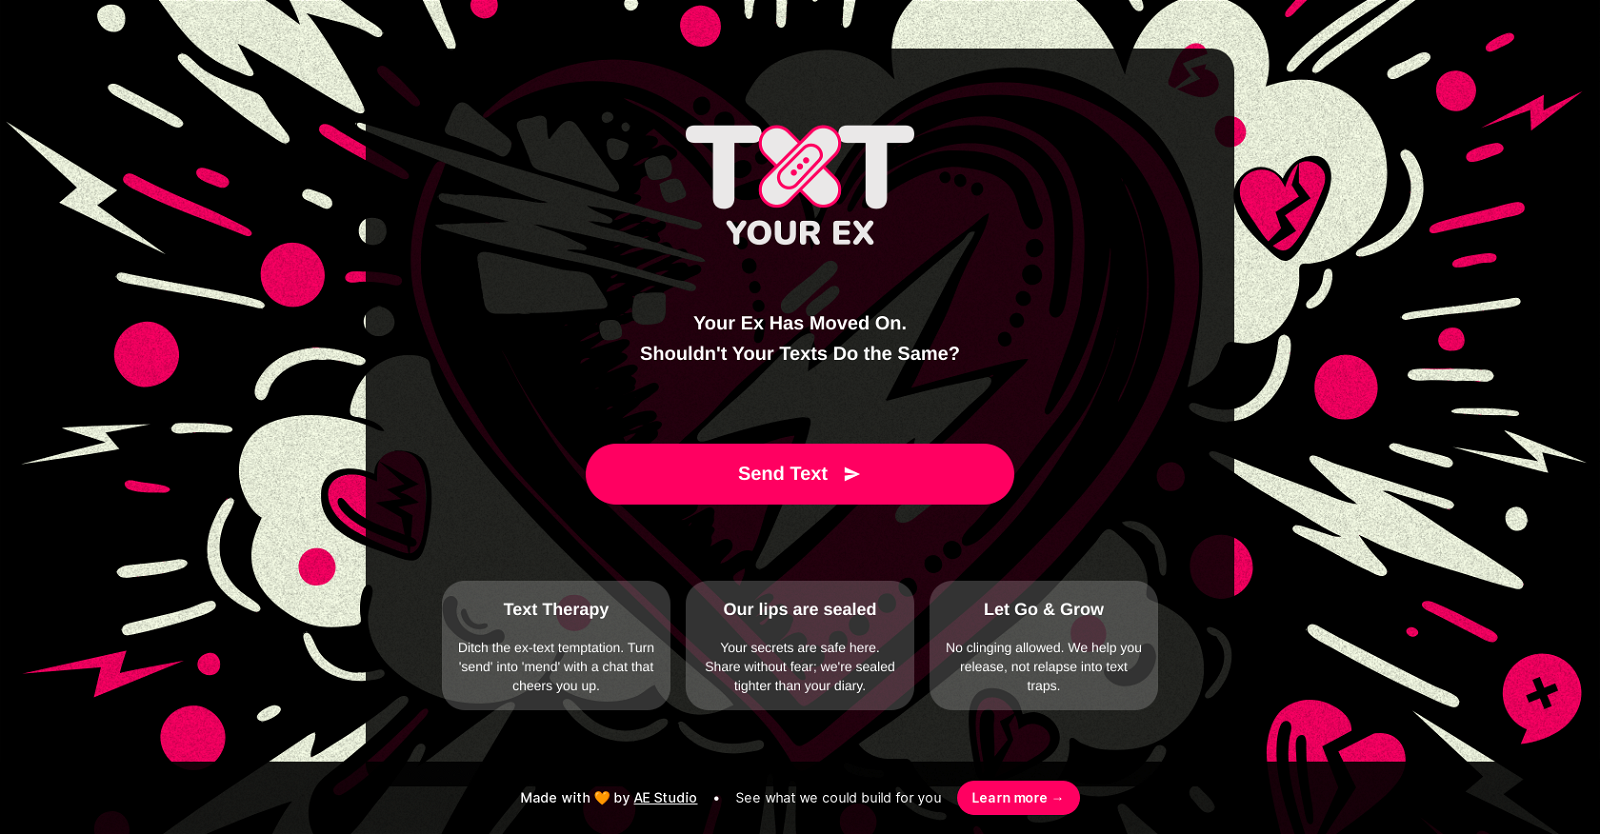 Txt Your Ex website